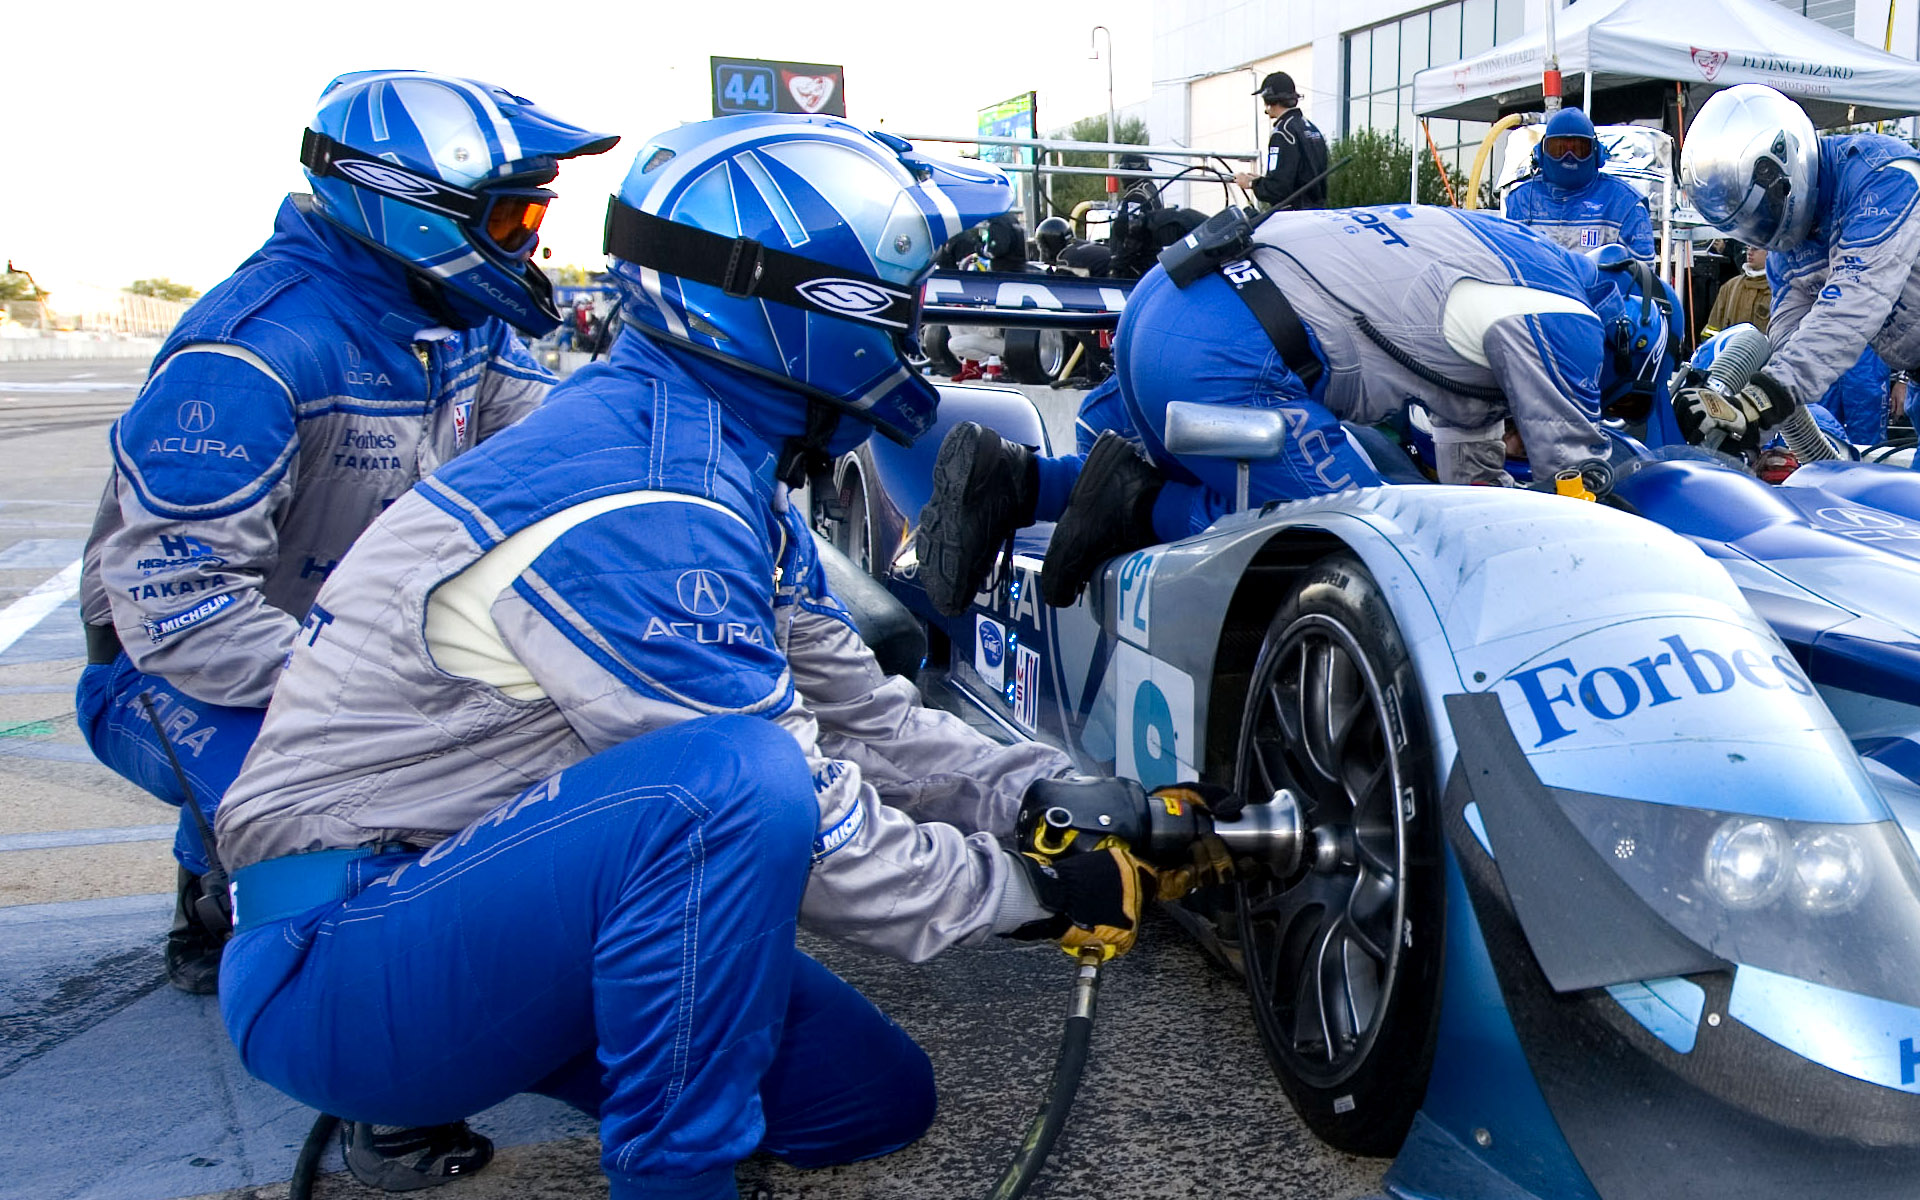 2007 Highcroft Racing Acura Crew Helmet